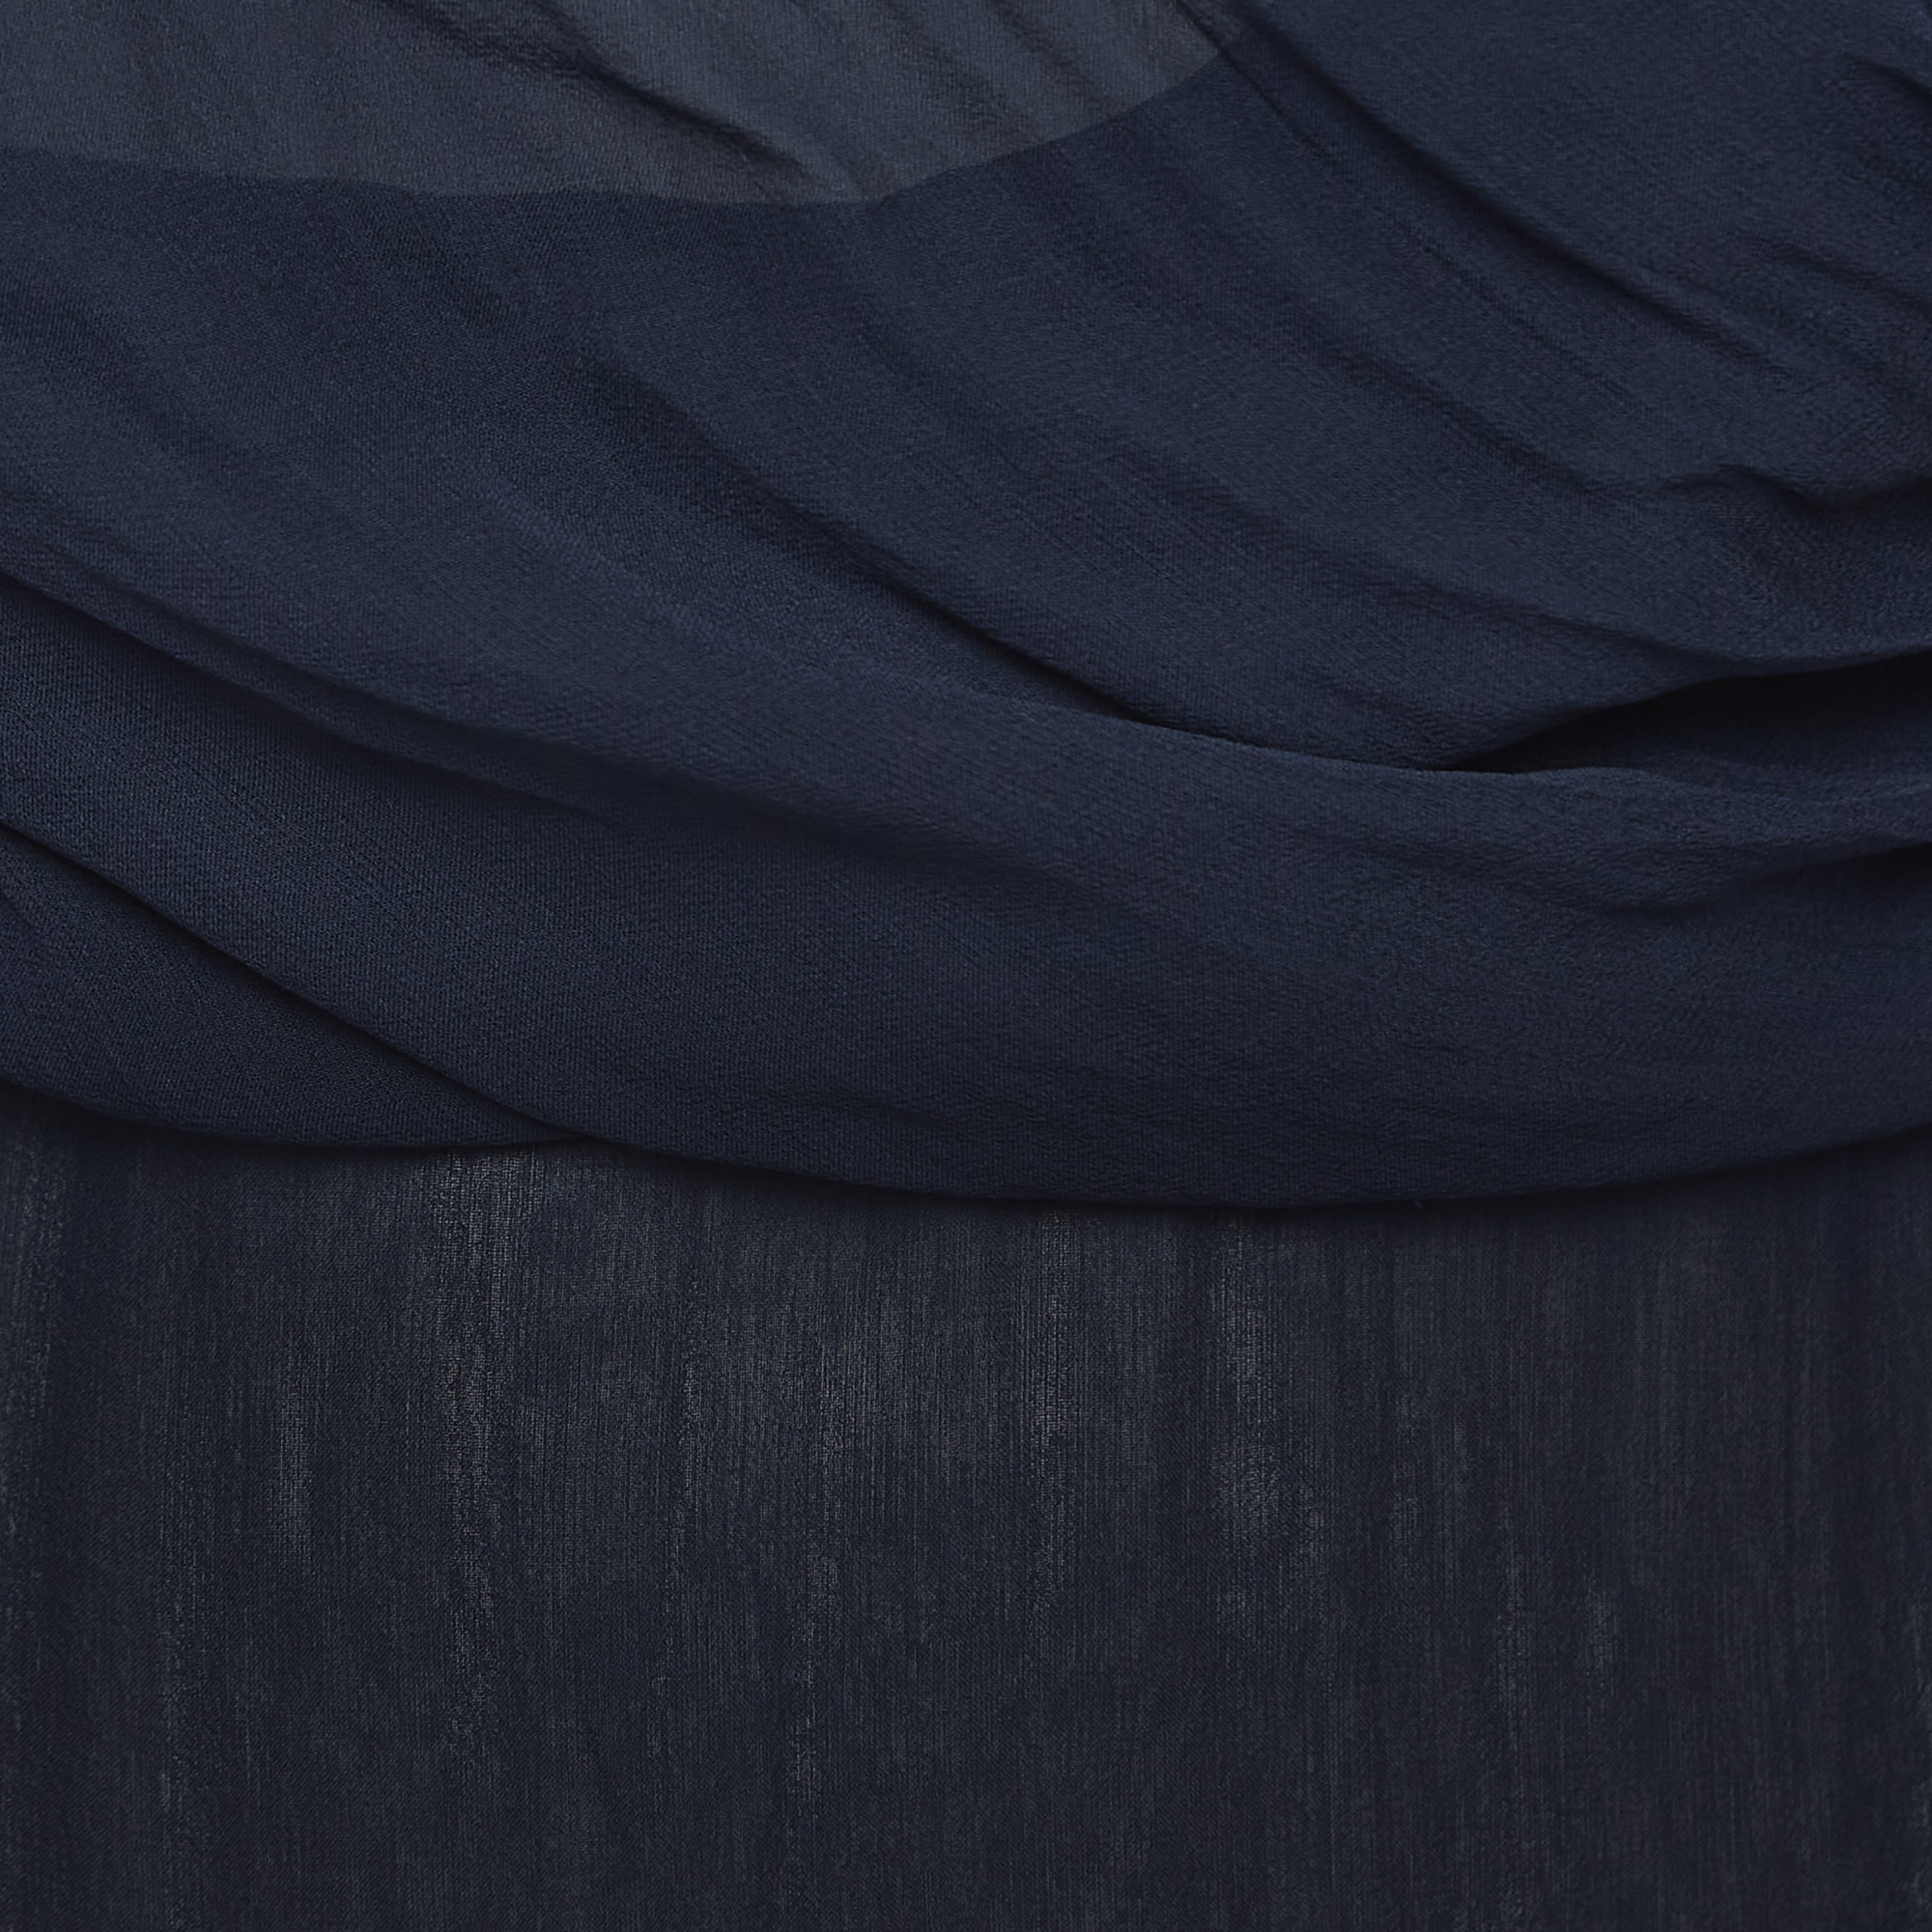 Givenchy Navy Blue Draped Silk Chiffon Long Sleeve Blouse M